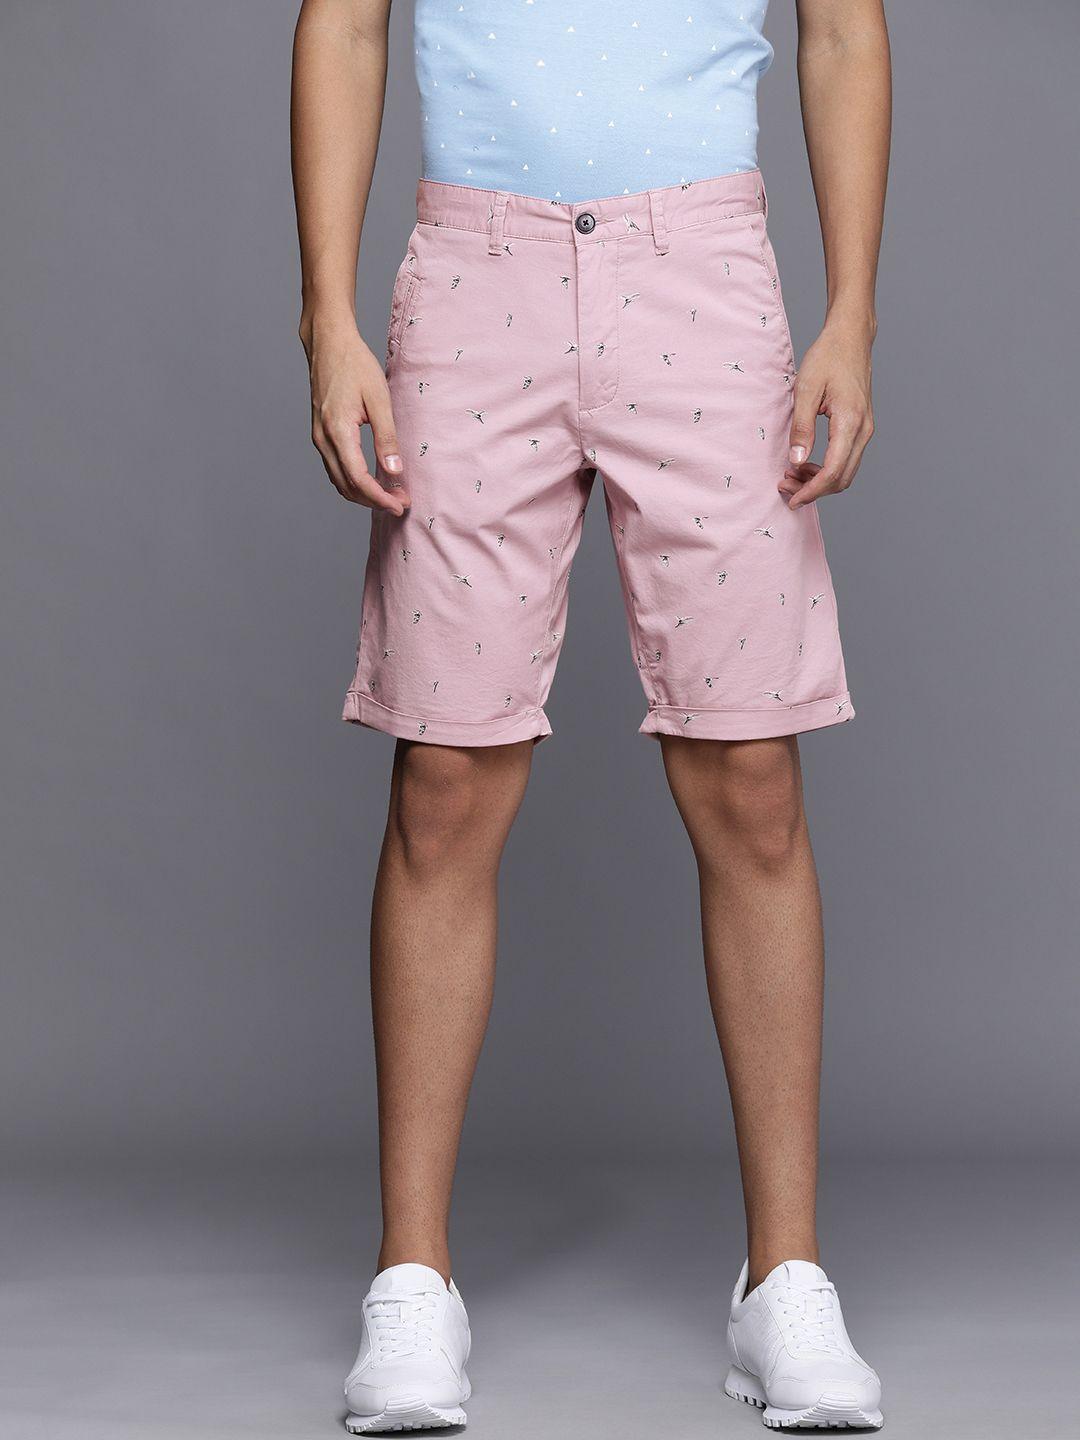 louis-philippe-sport-men-pink-conversational-printed-slim-fit-low-rise-shorts